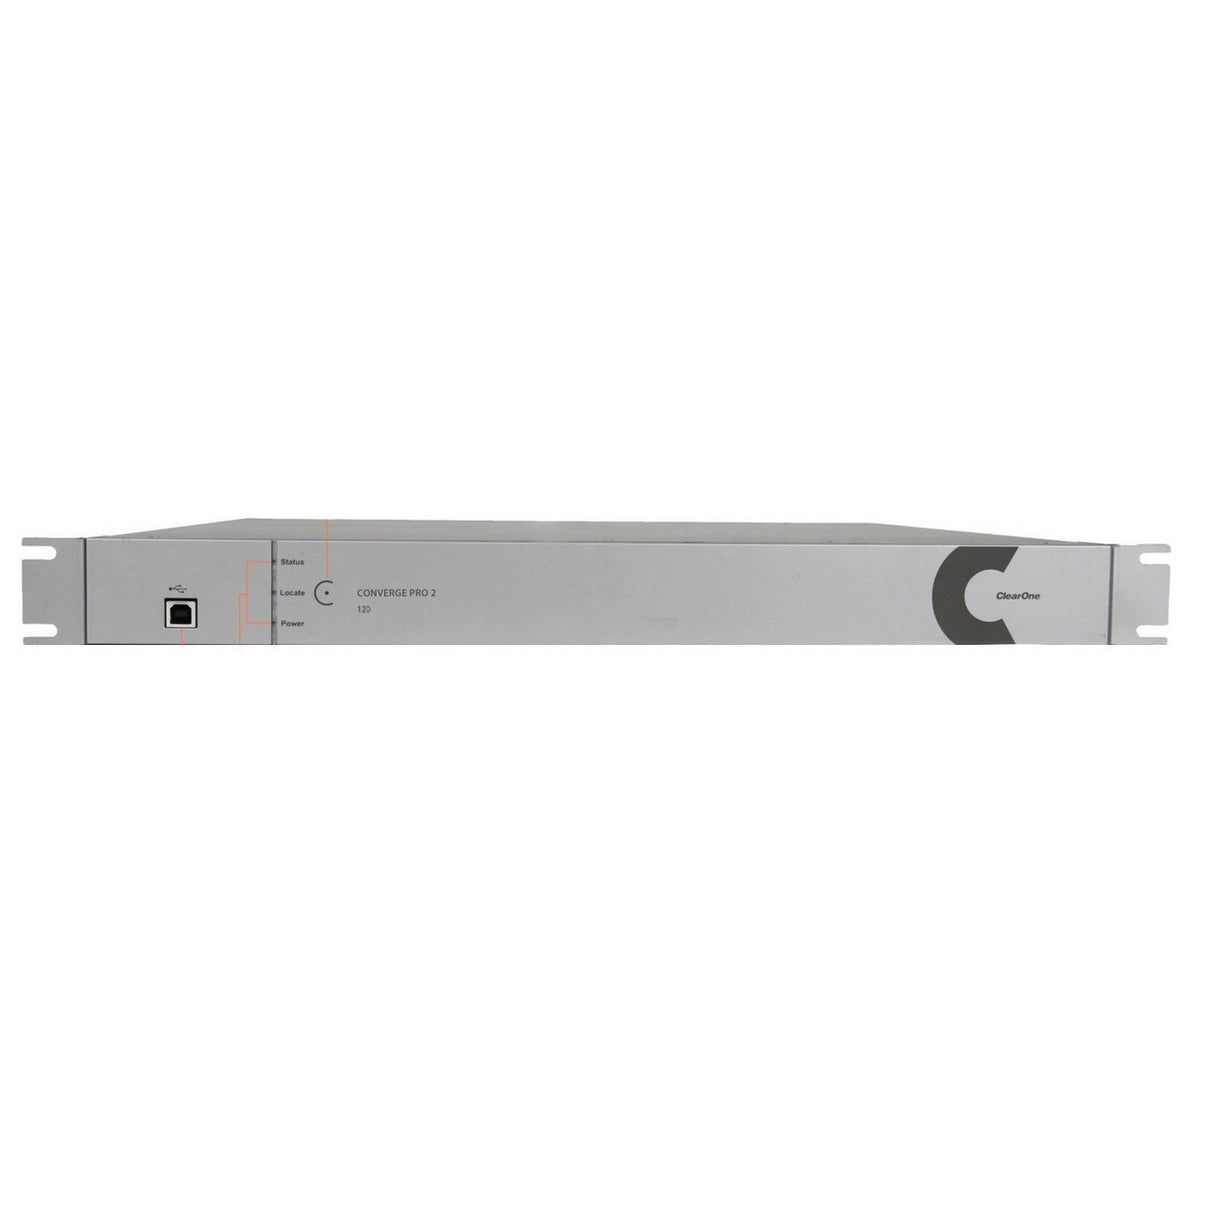 Clearone 910-3200-004 | Converge Pro 2 120 USB DSP Mixer